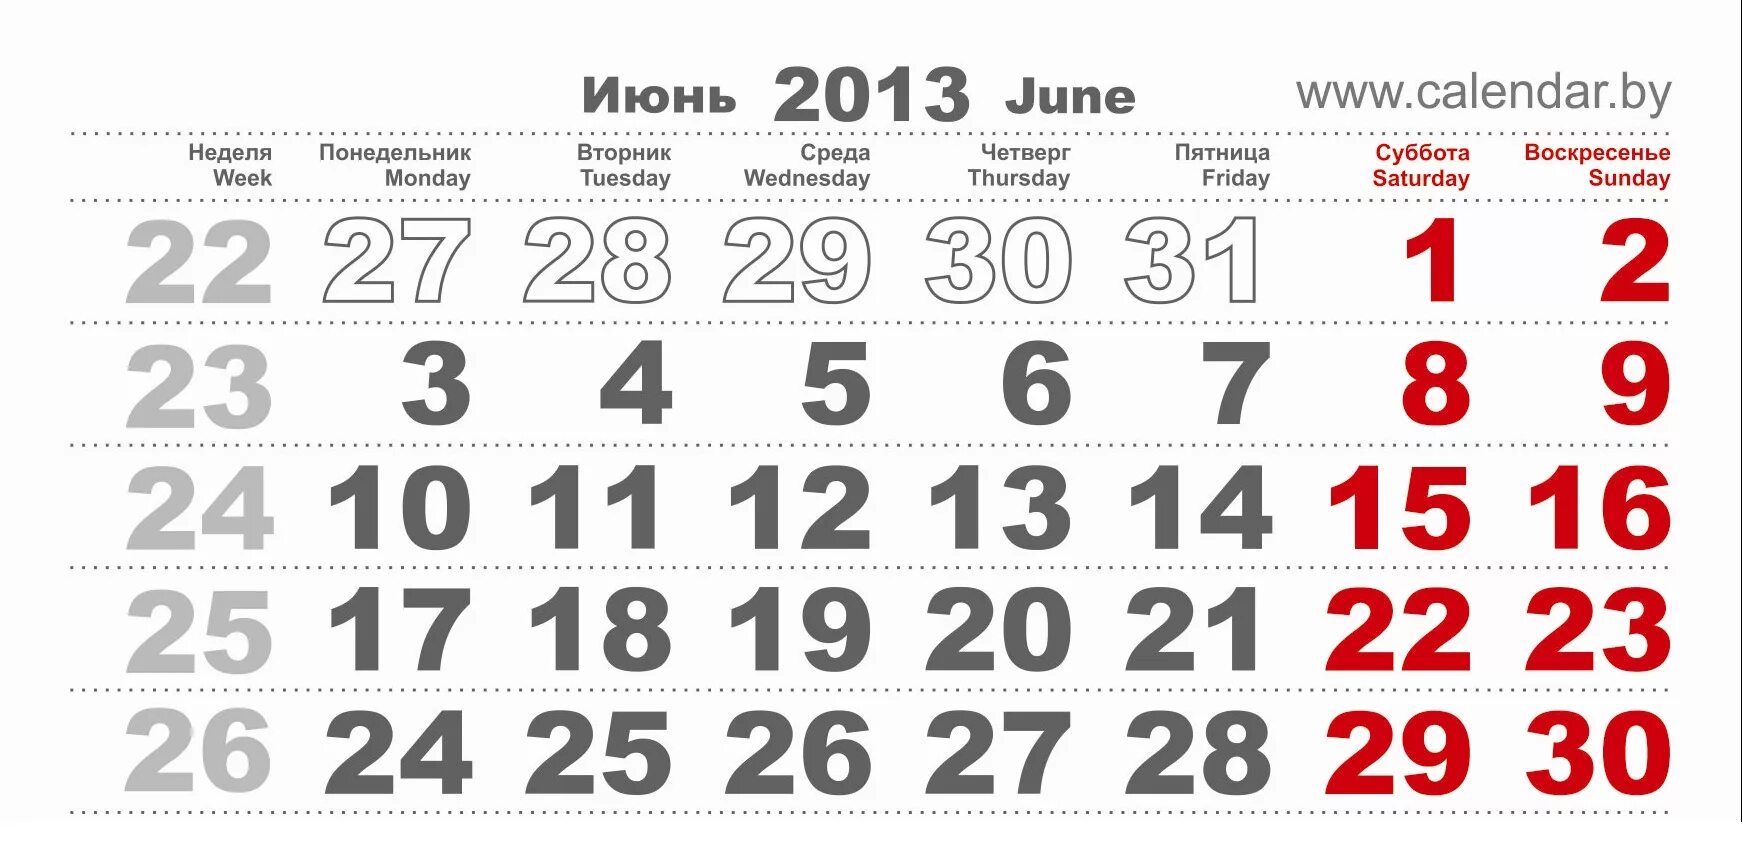 Октябрь месяц 2017 года. Календарь на март 2013 года. Июль 2013 года календарь. Март 2016 года. Октябрь 2016 года календарь.